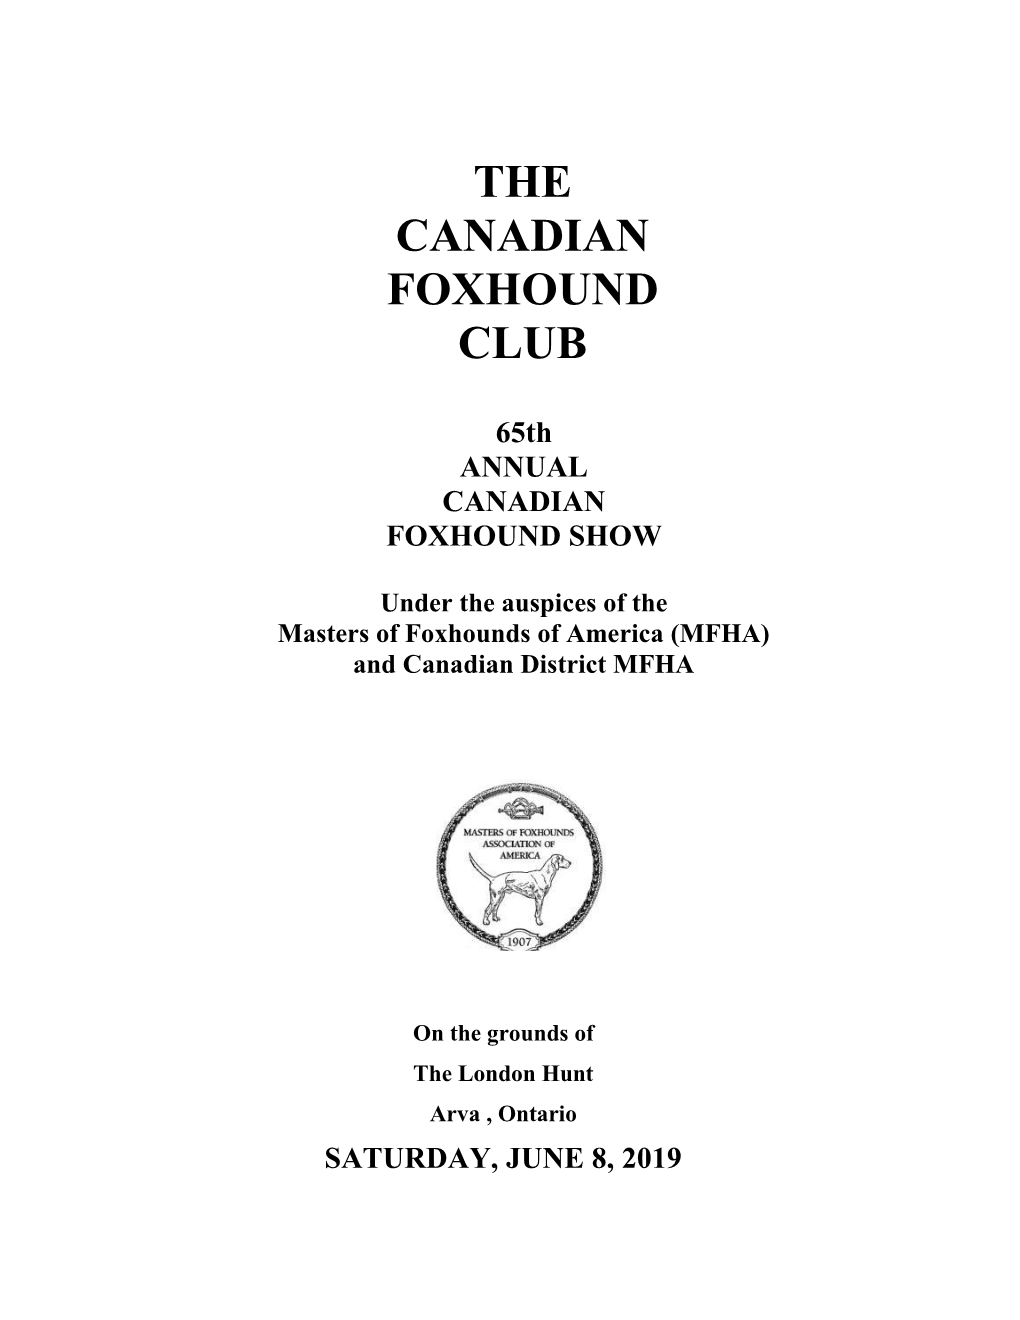 The Canadian Foxhound Club